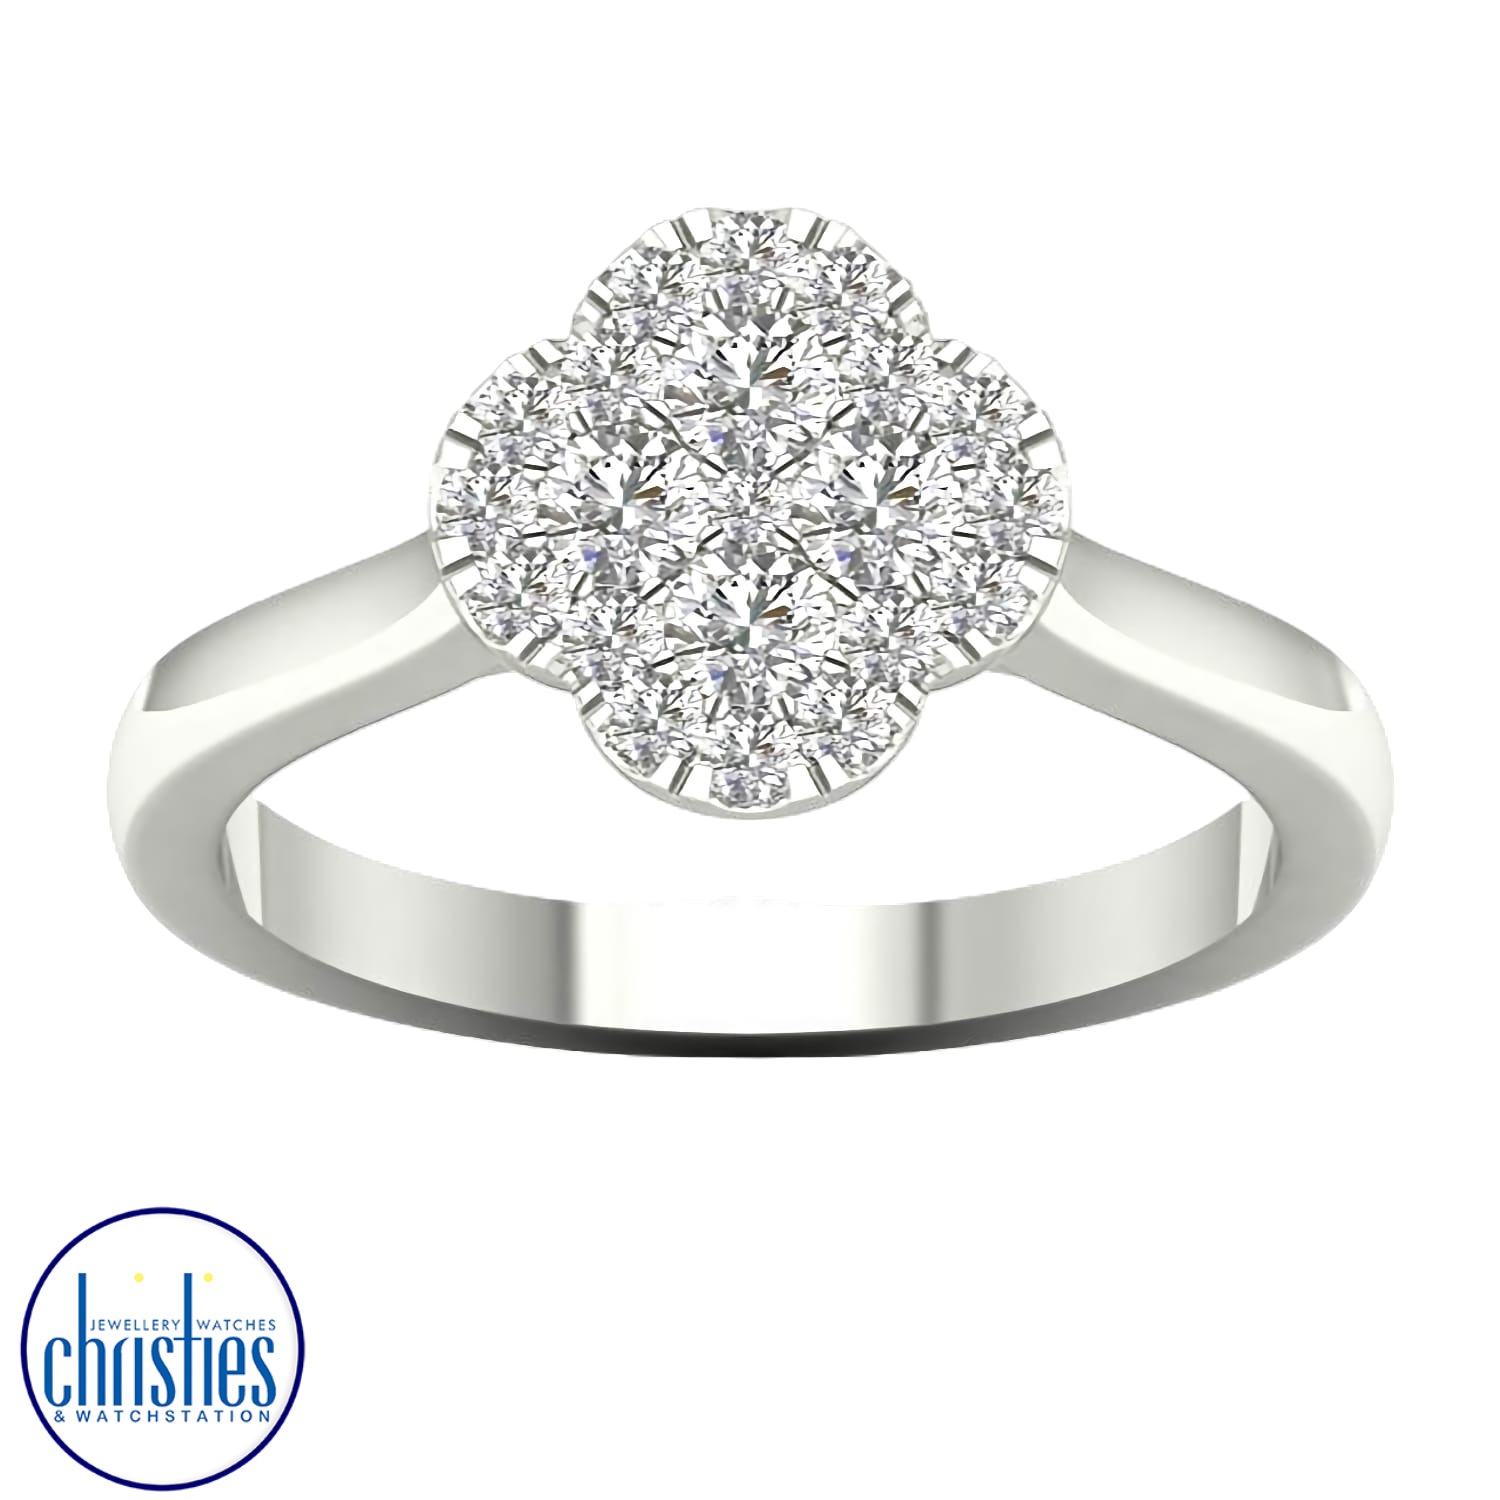 9ct White Gold Diamond Engagement Ring 0.50ct TDW RB21012EG.  Affordable Engagement Rings Nz $1,850.00